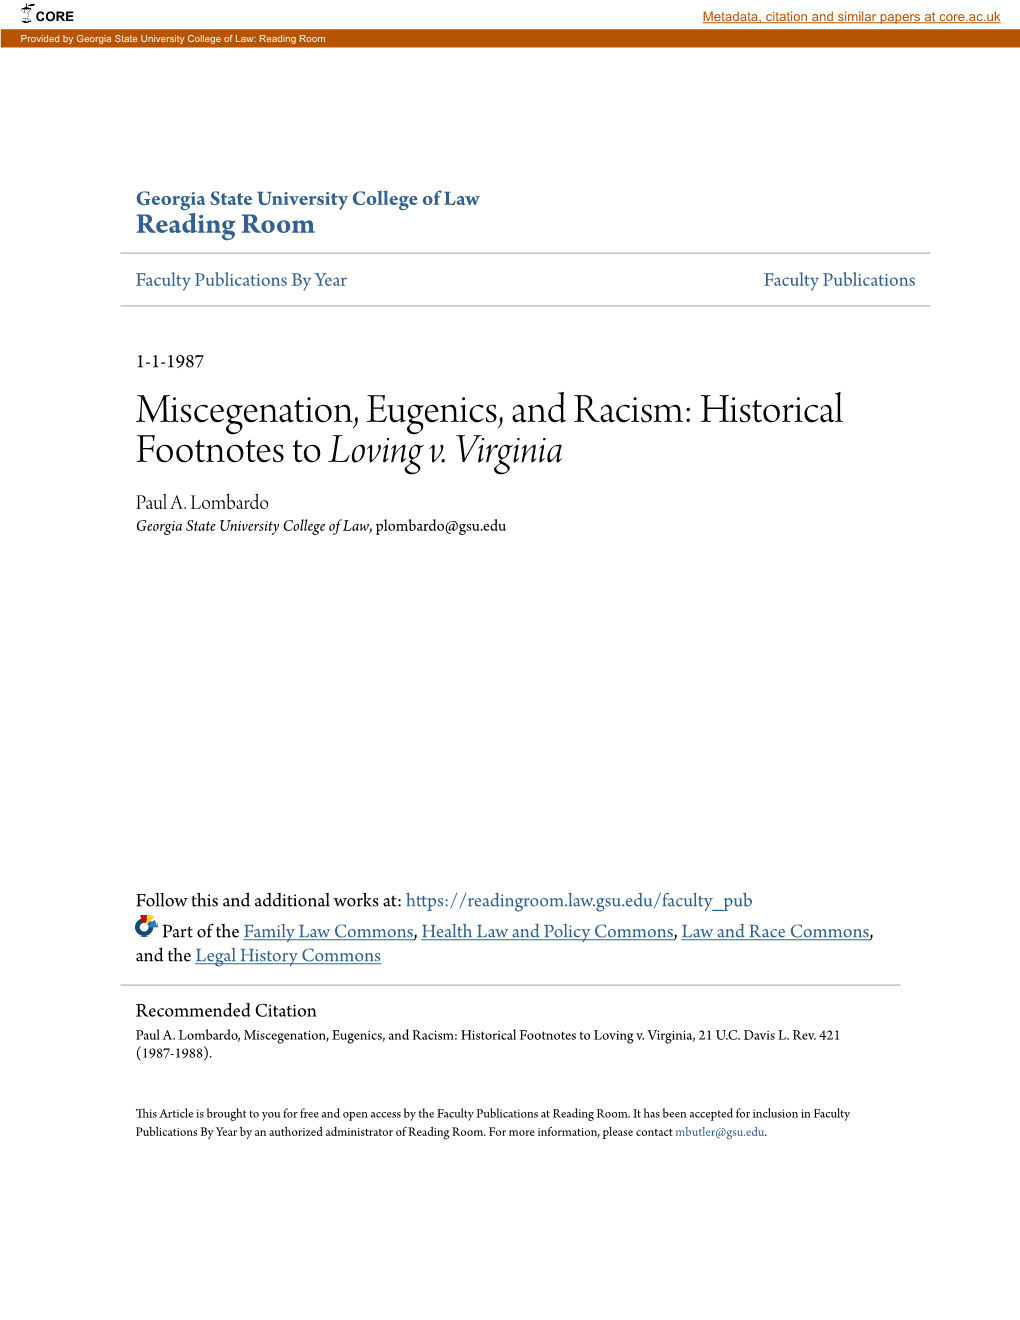 Miscegenation, Eugenics, and Racism: Historical Footnotes to Loving V